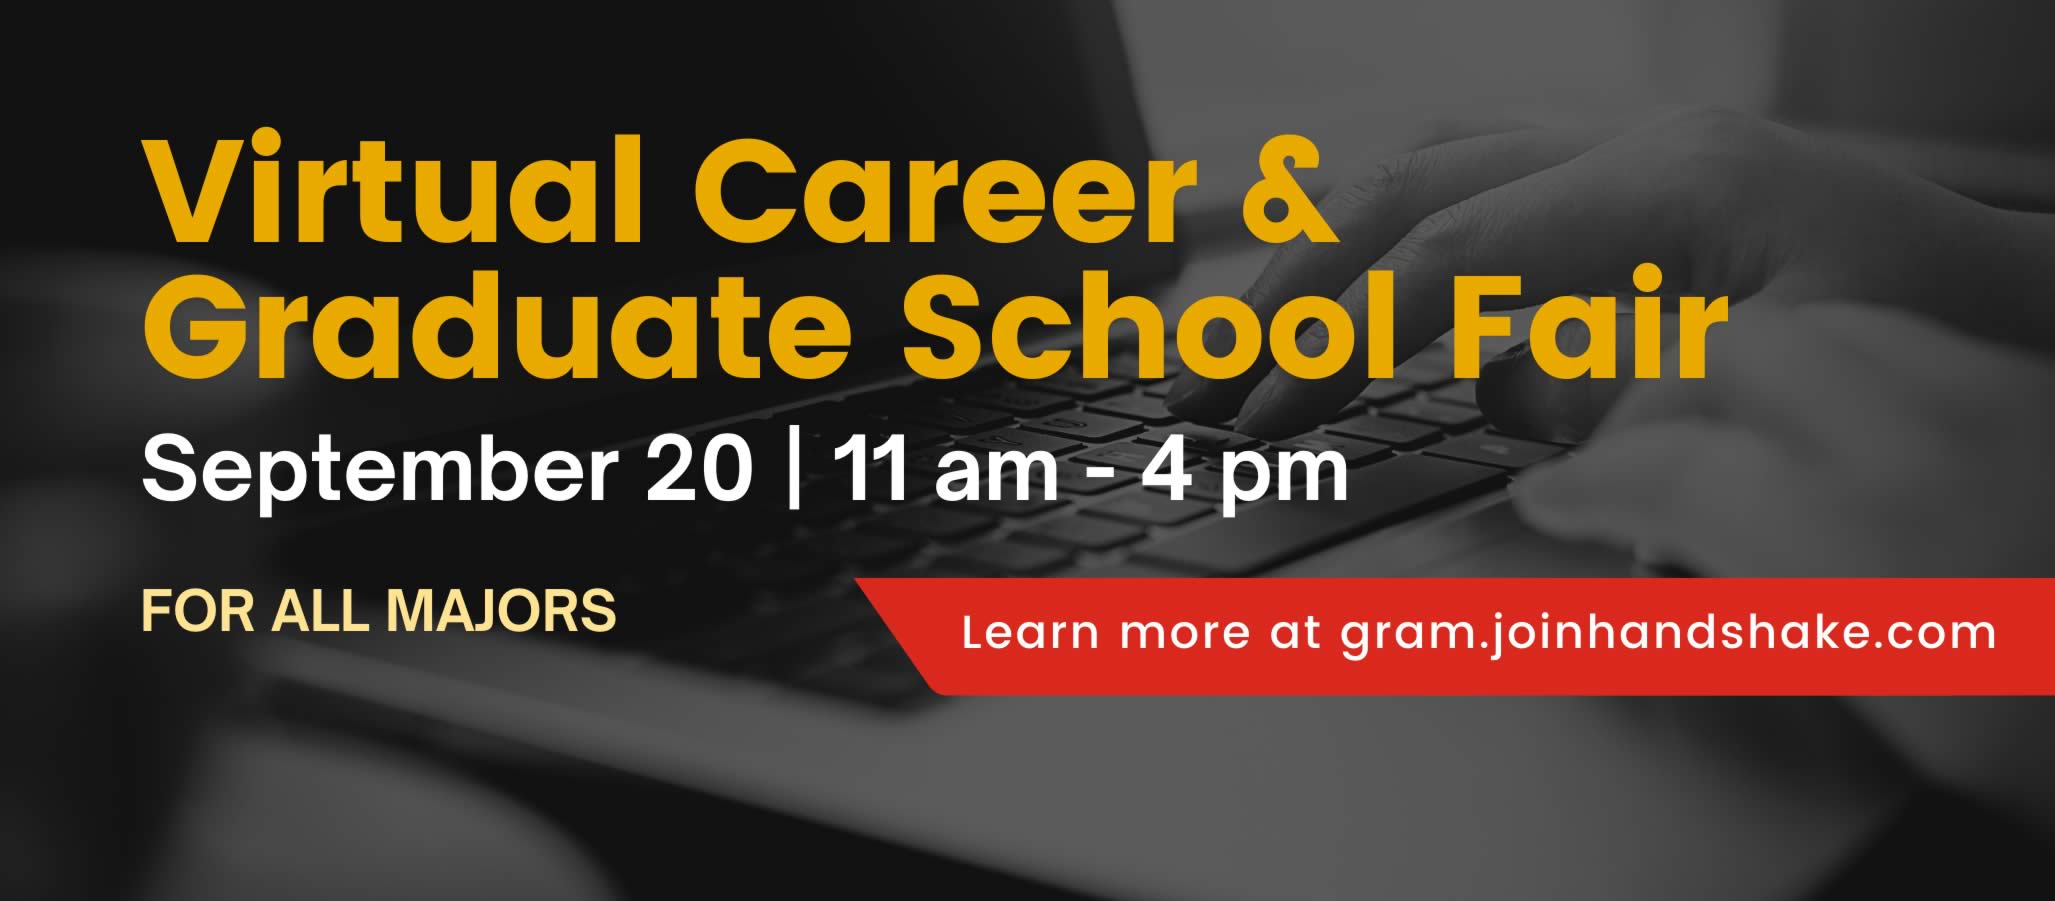 Virtual Career & Graduate School Fair - Sept. 20, 11am-4pm, all majors - more at gram.joinhandshake.com